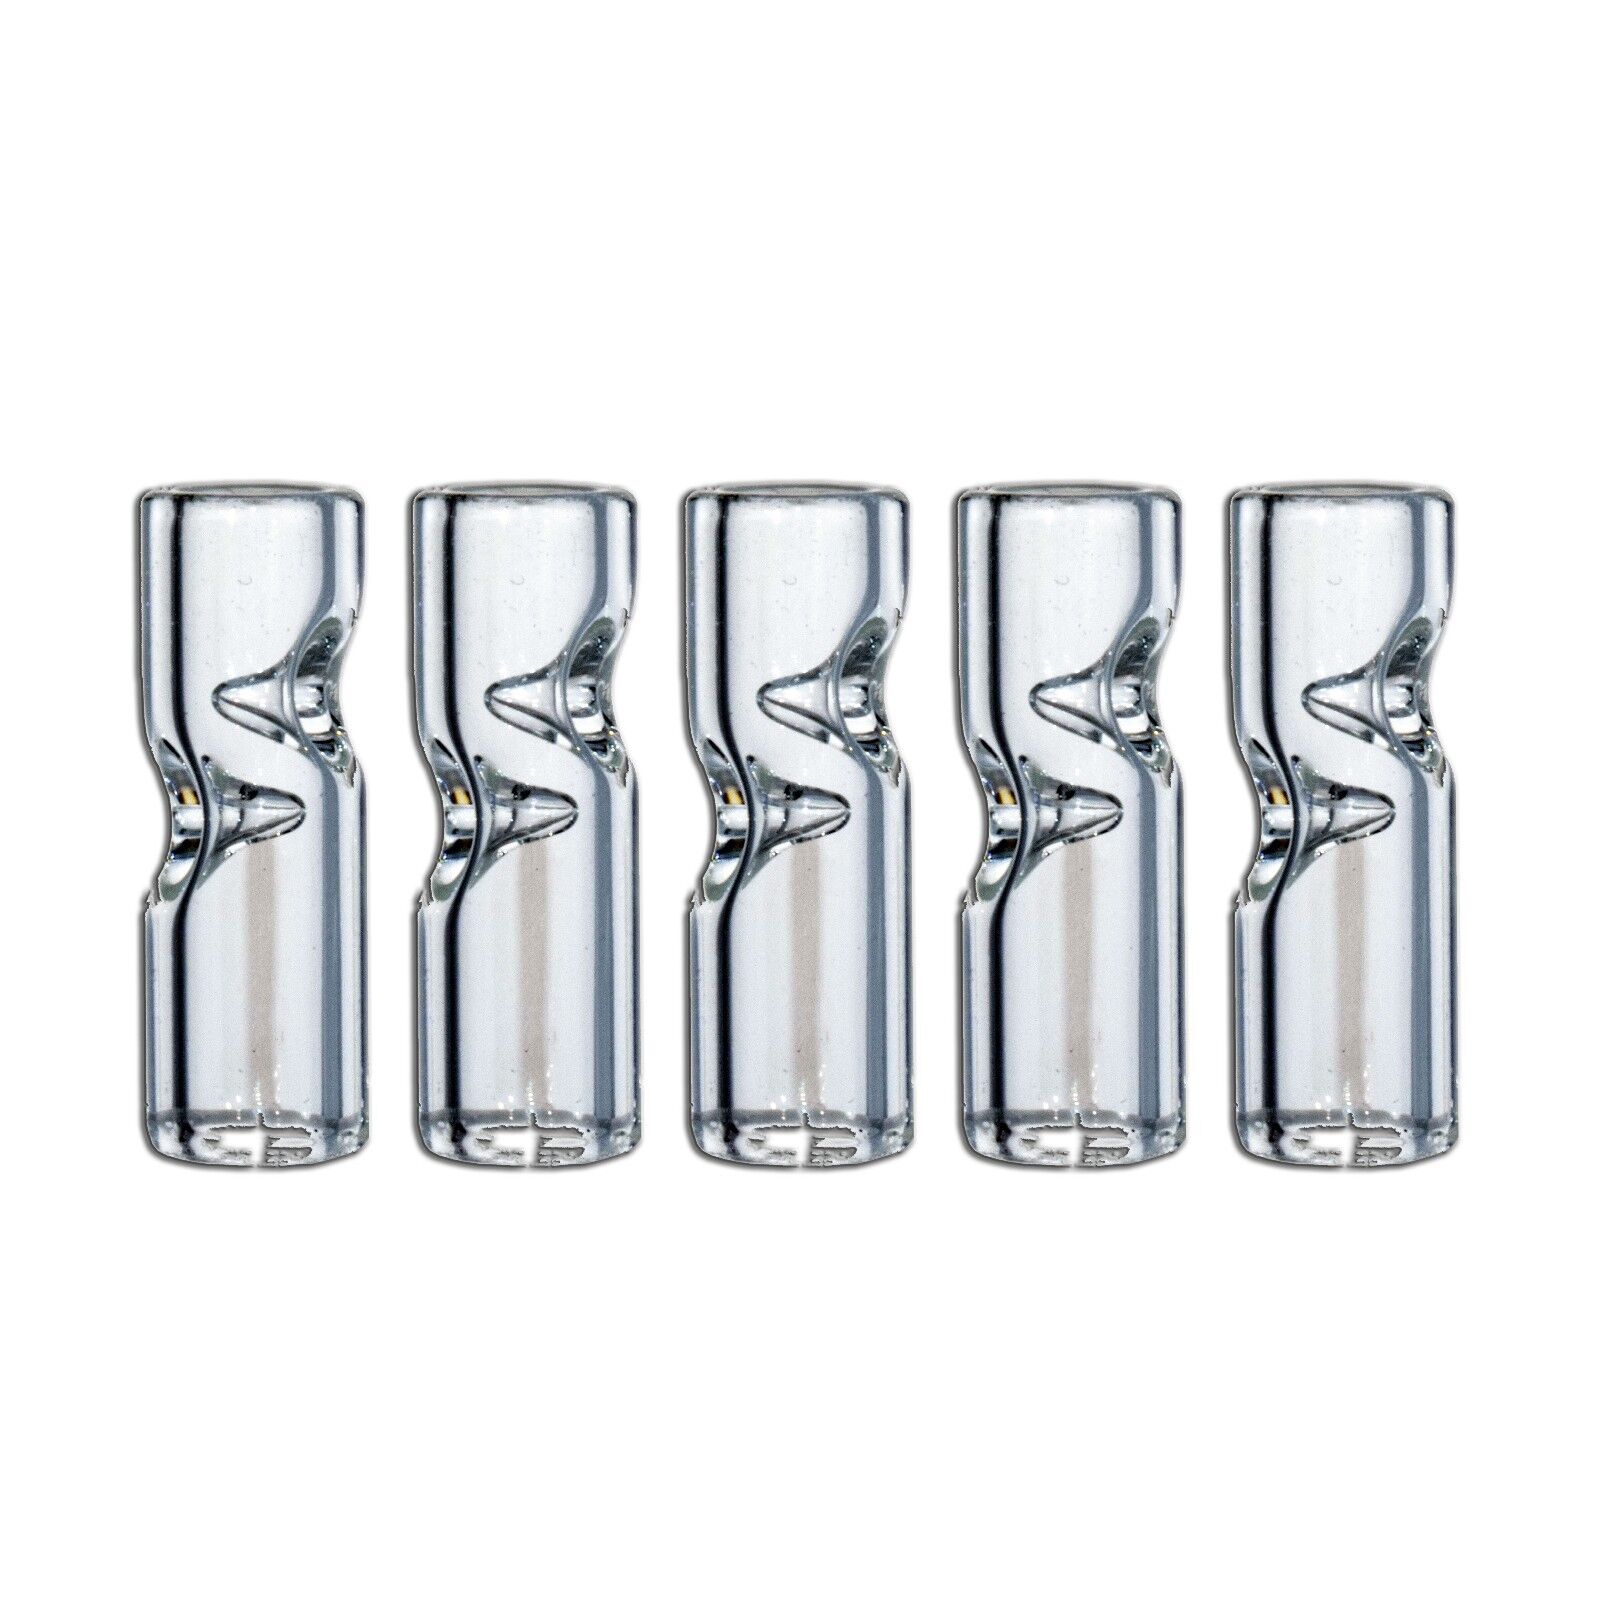 5 Pack Glass Filter Tips 4 Smoking (High Quality Glass Crutch) - Round No Lip